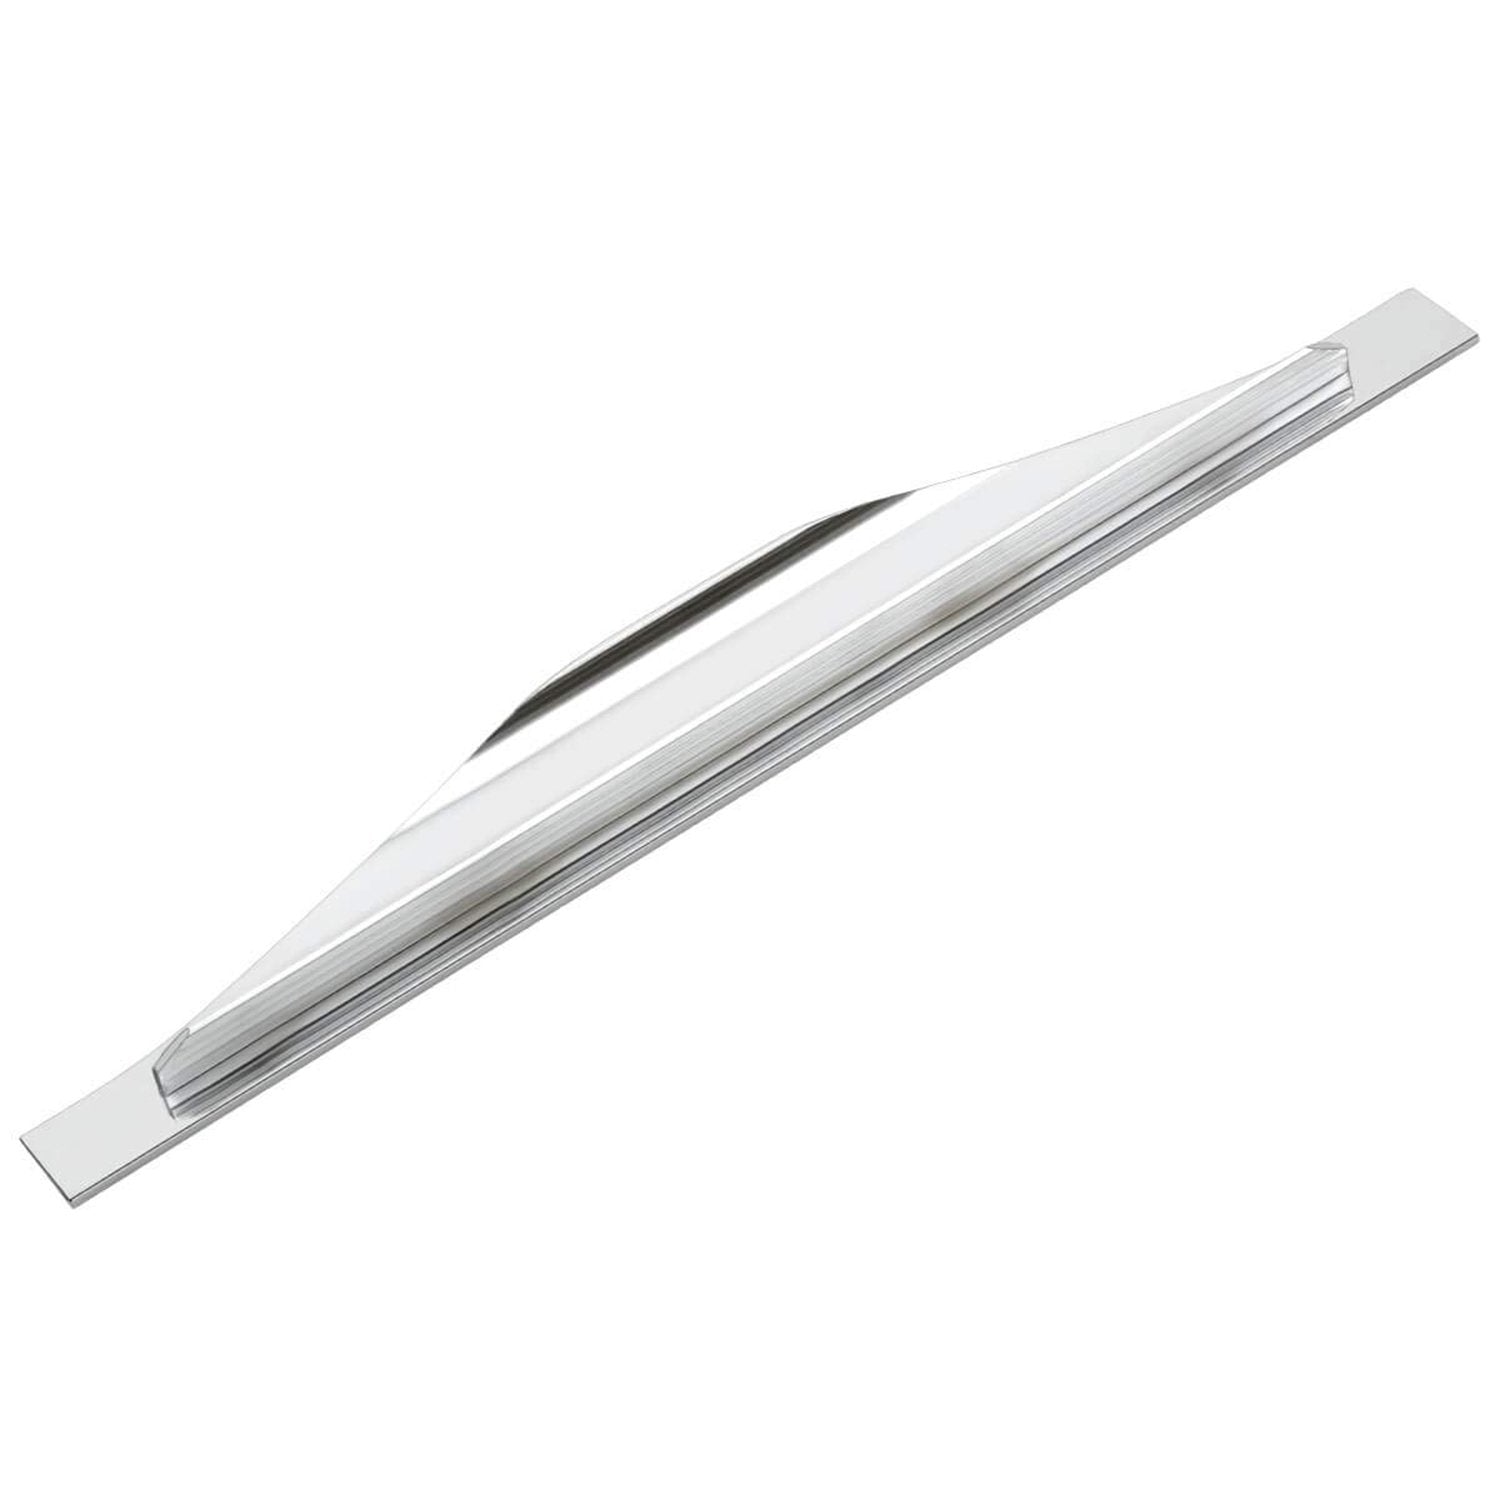 482_aluminium profile handle 12inch silver